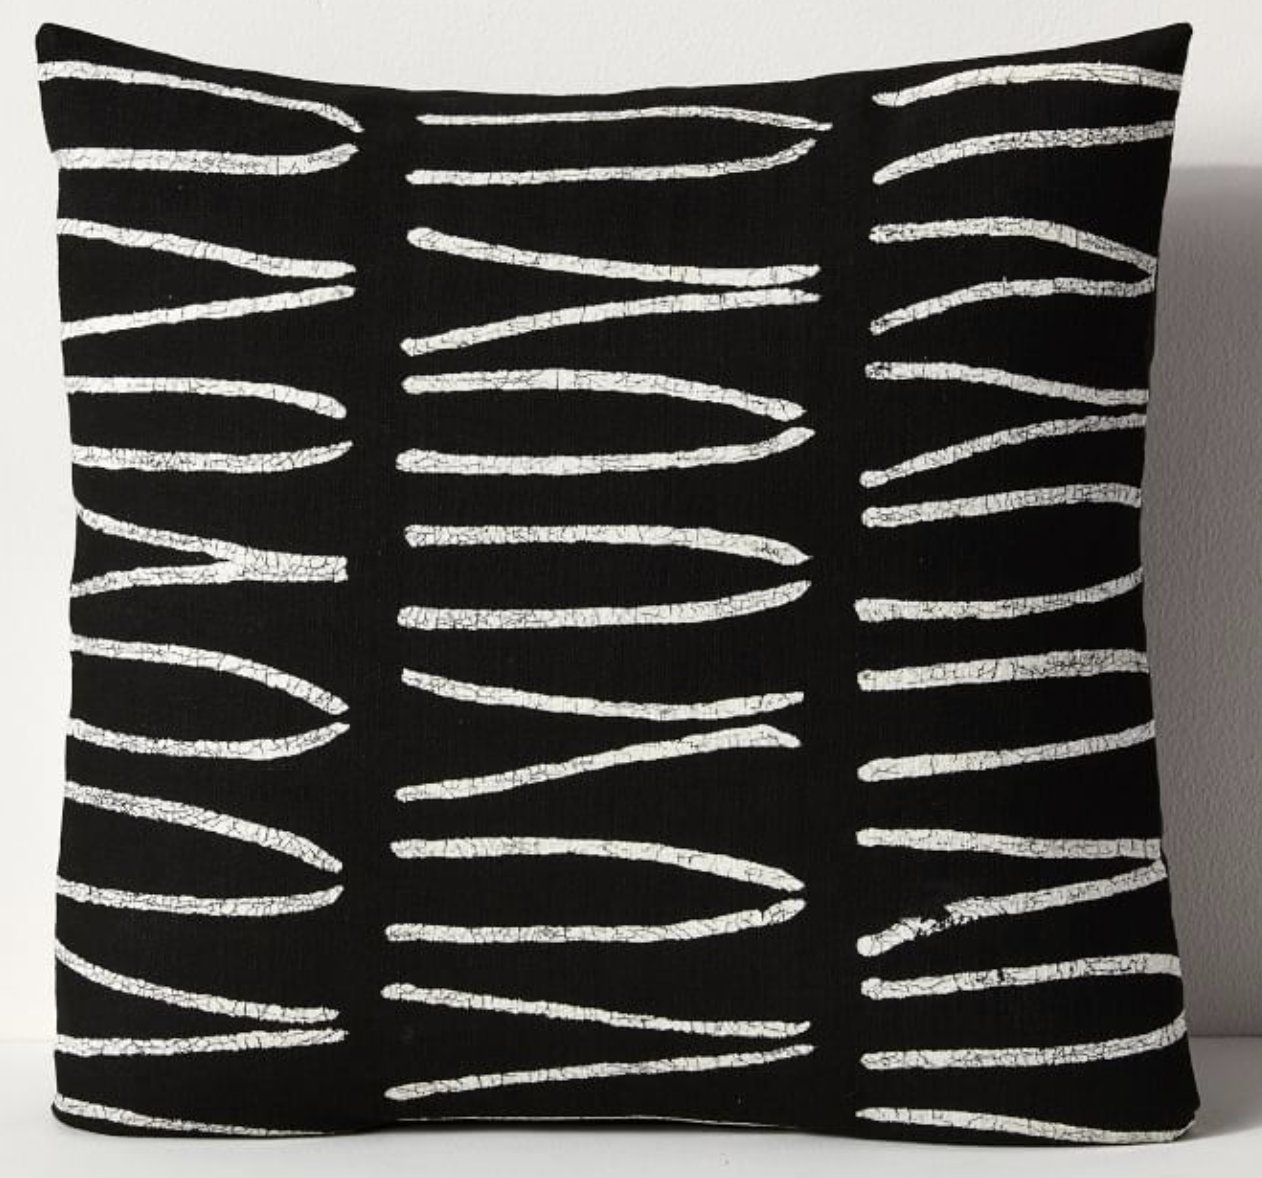 Sadza Batik Pillows, Lines, Black + White - Image 0